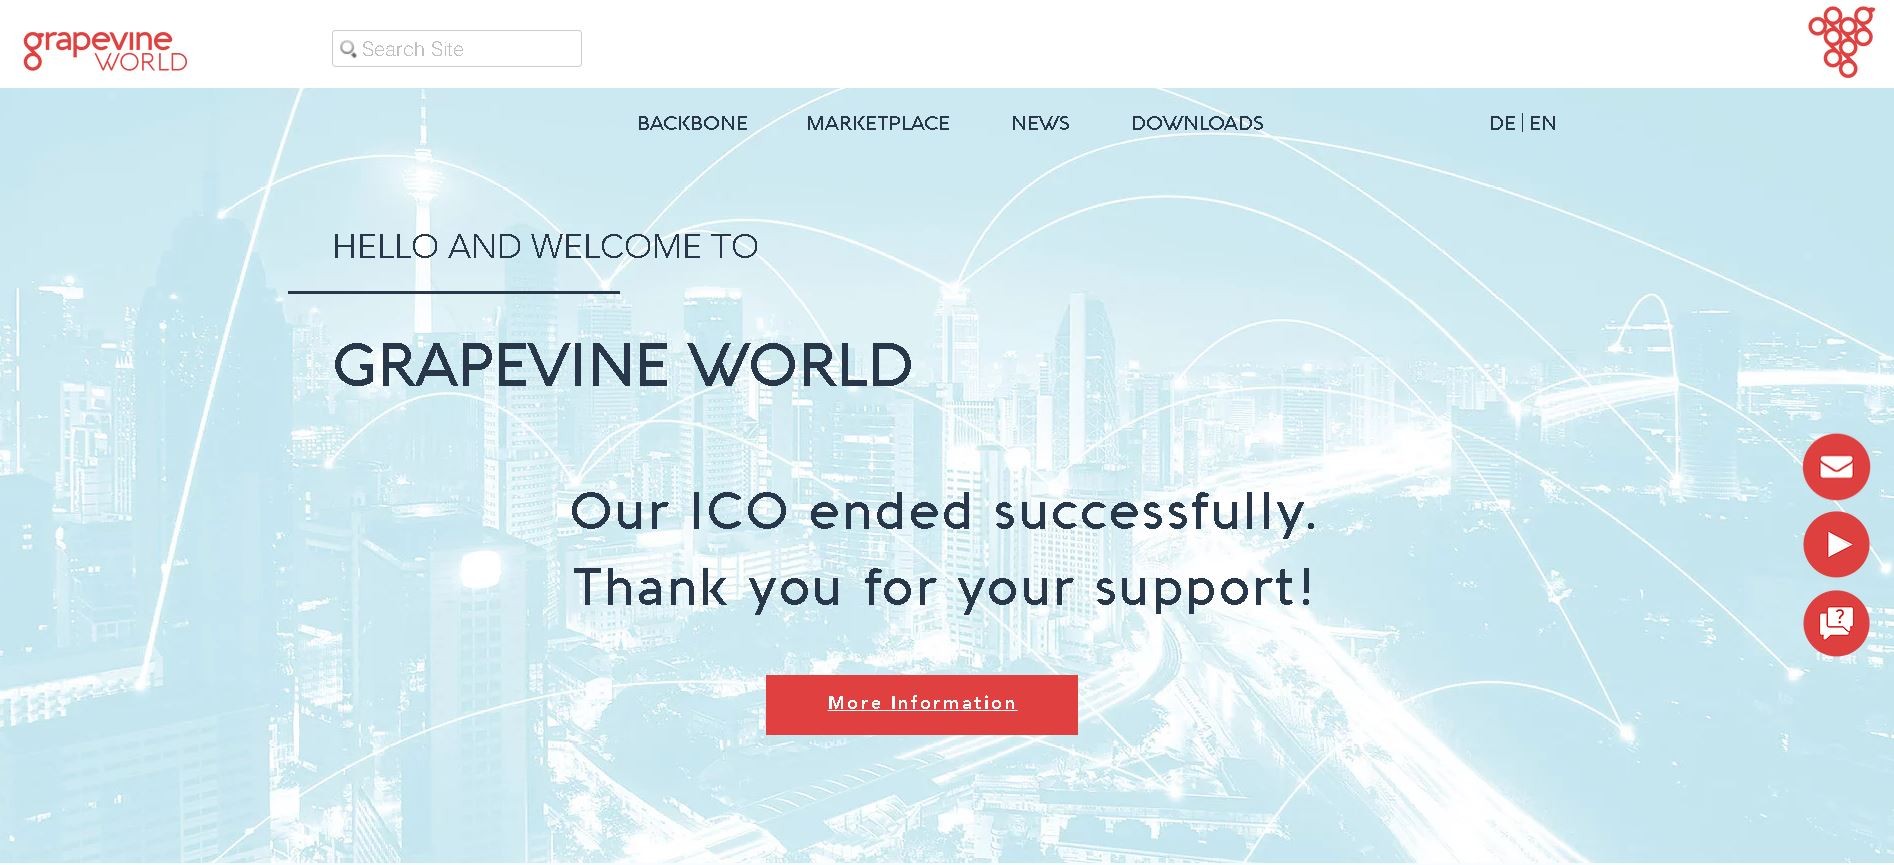 Grapevine World Screenshot - ICO